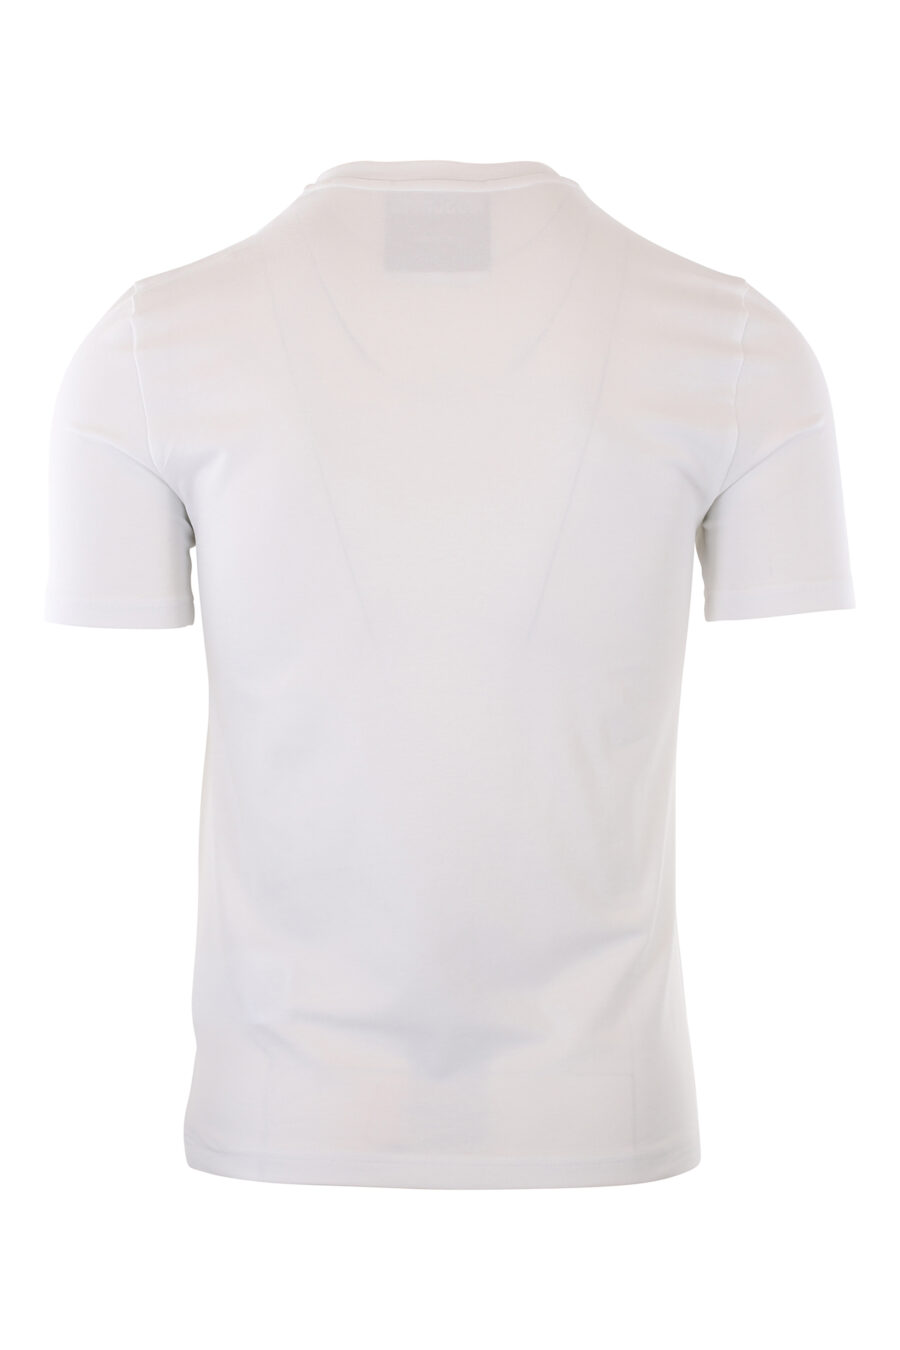 Camiseta blanca con maxi logo doble "smiley" - IMG 2428